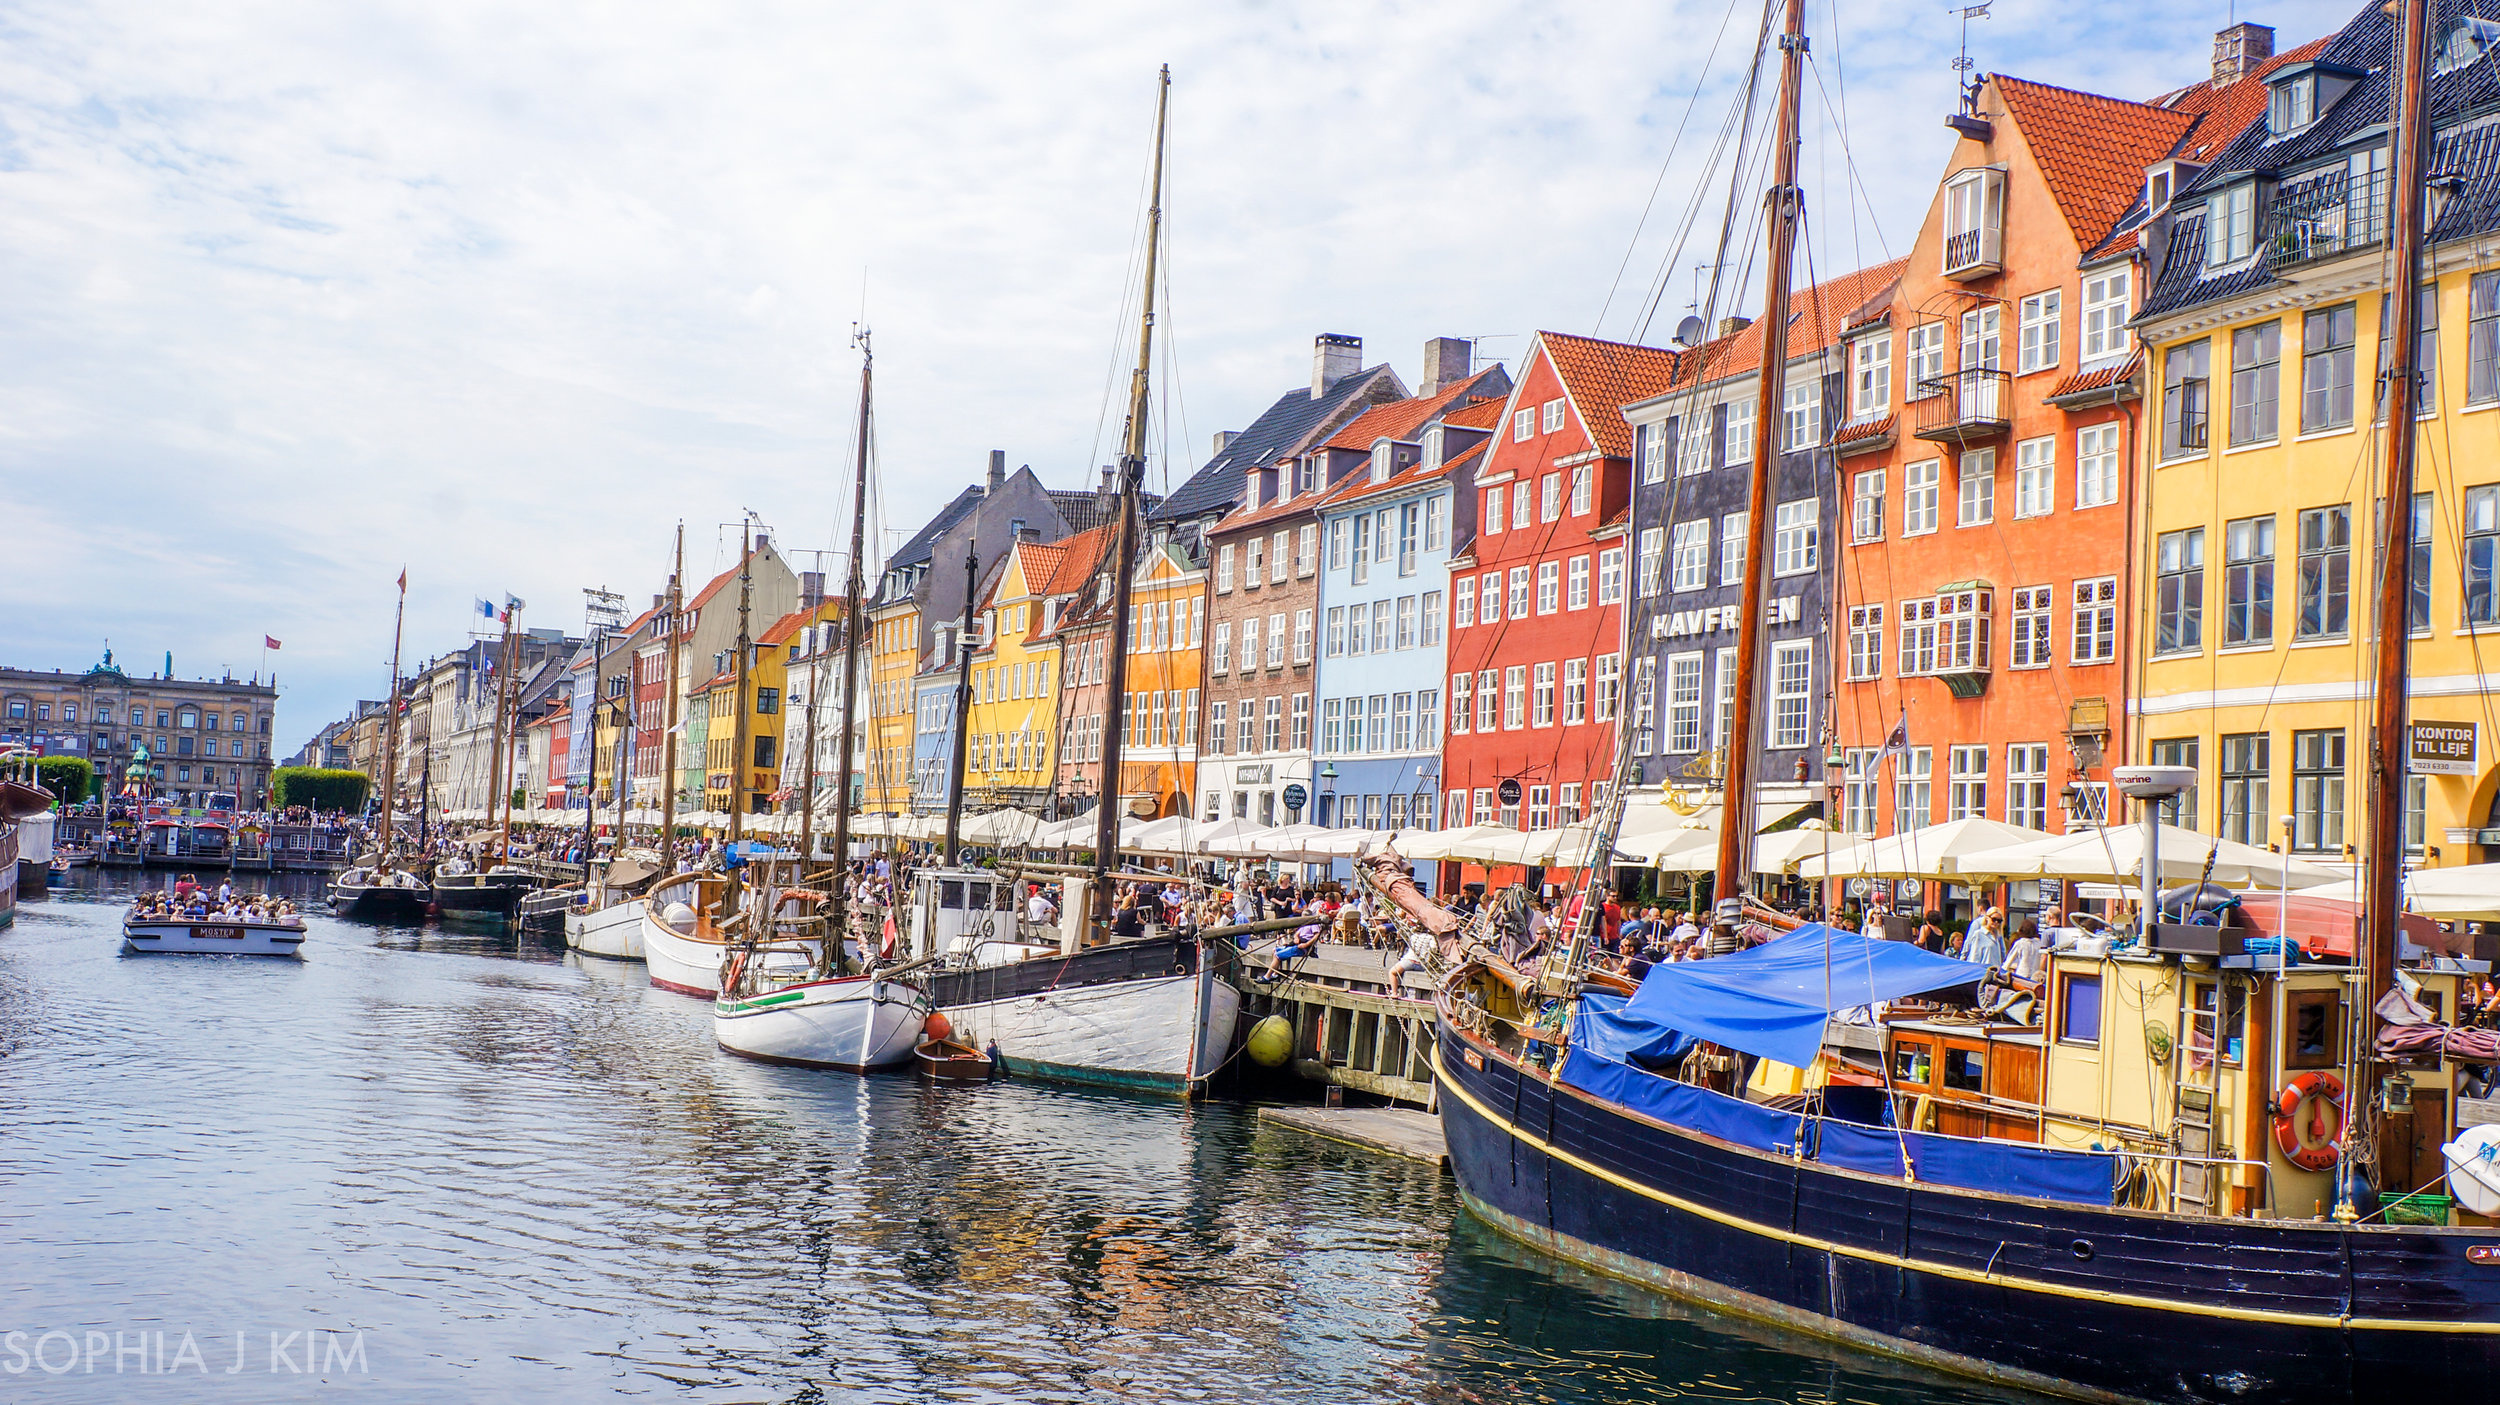 Sophia Kim's Europe trip, Nyhavn highlights, Travel inspiration, Visual storytelling, 2500x1410 HD Desktop